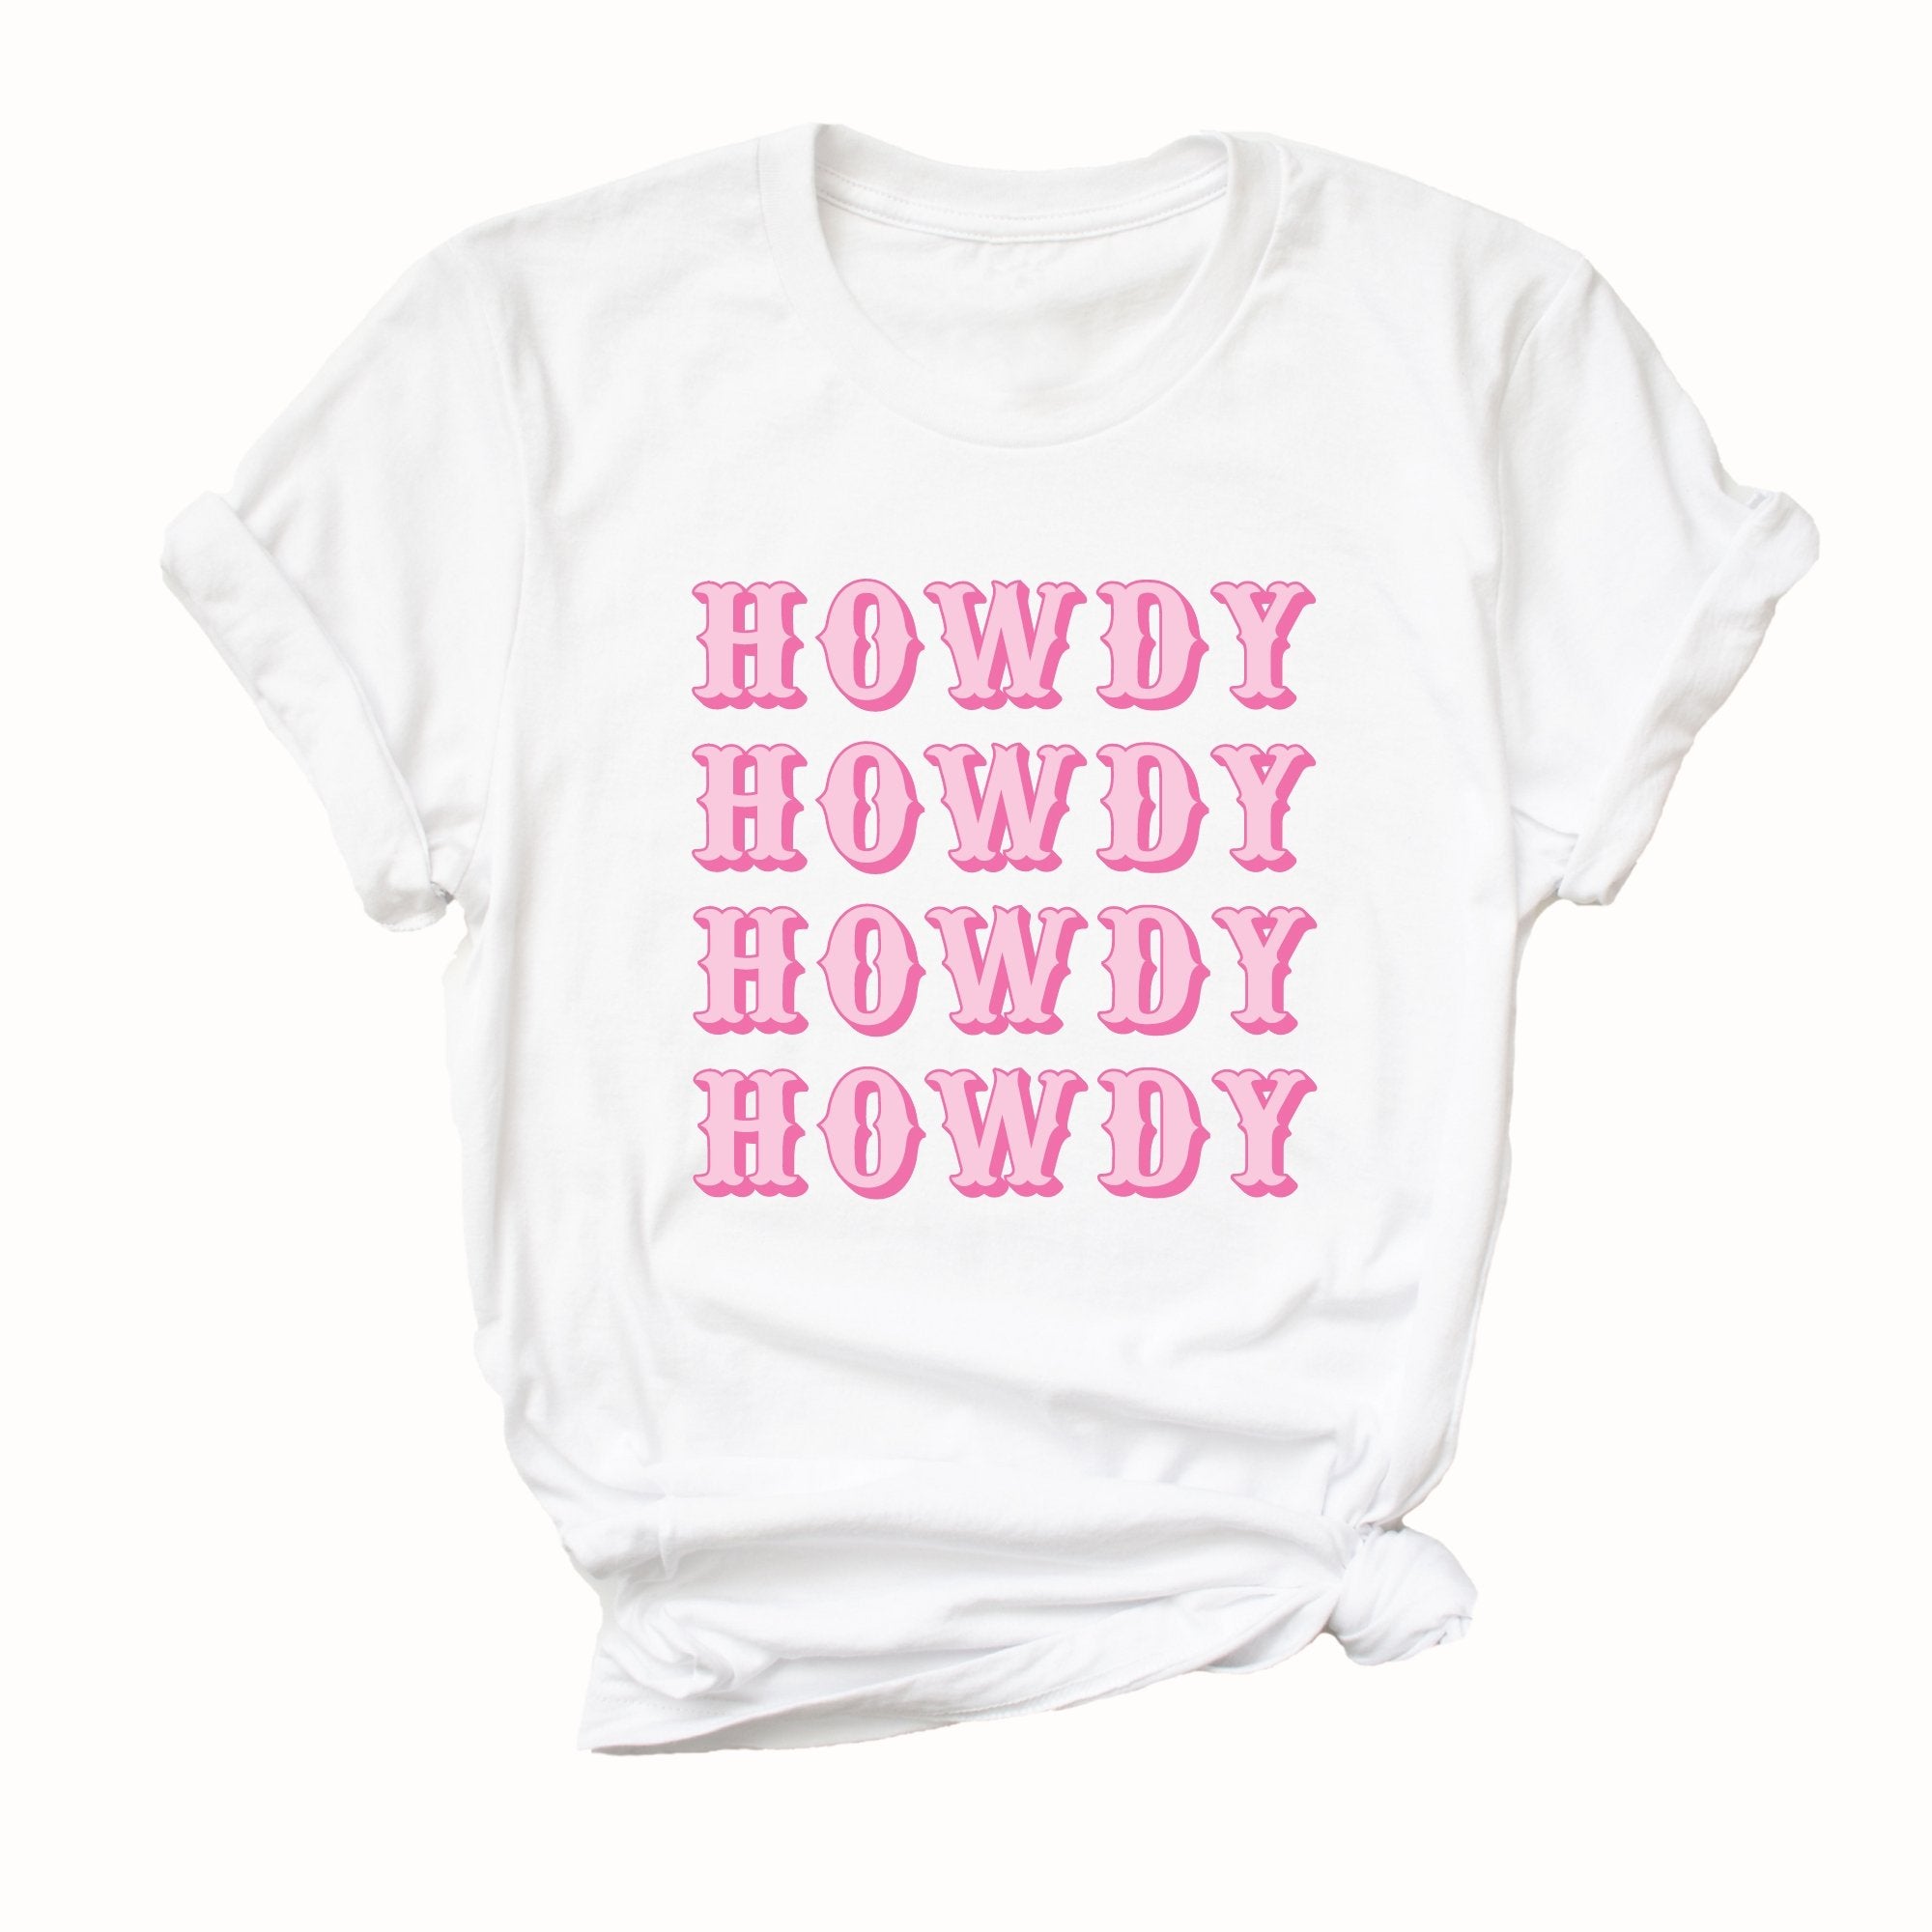 howdy-shirt-246057_2000x